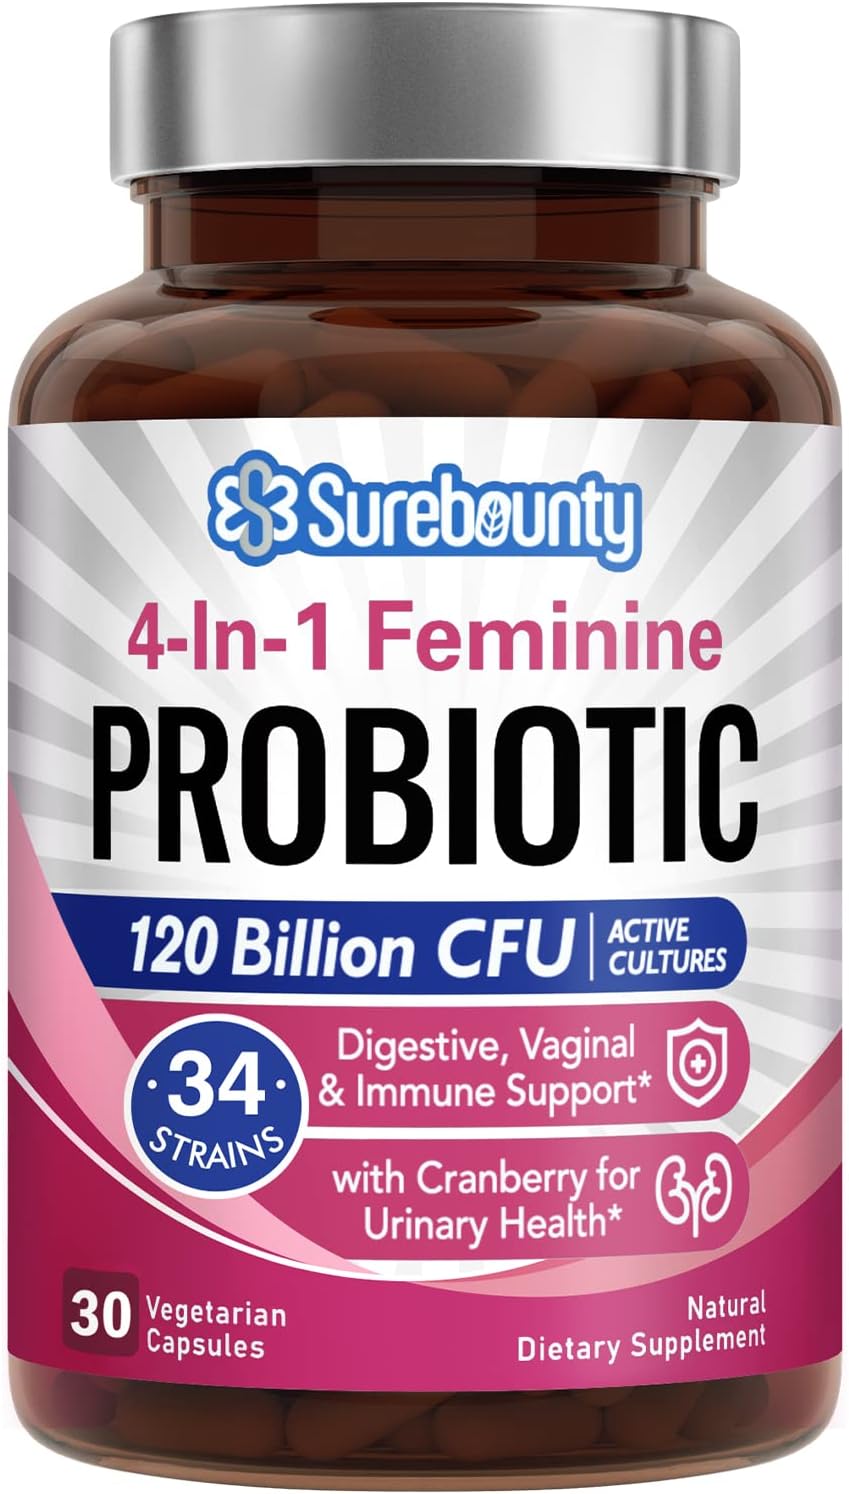 Surebounty Probiotics Review